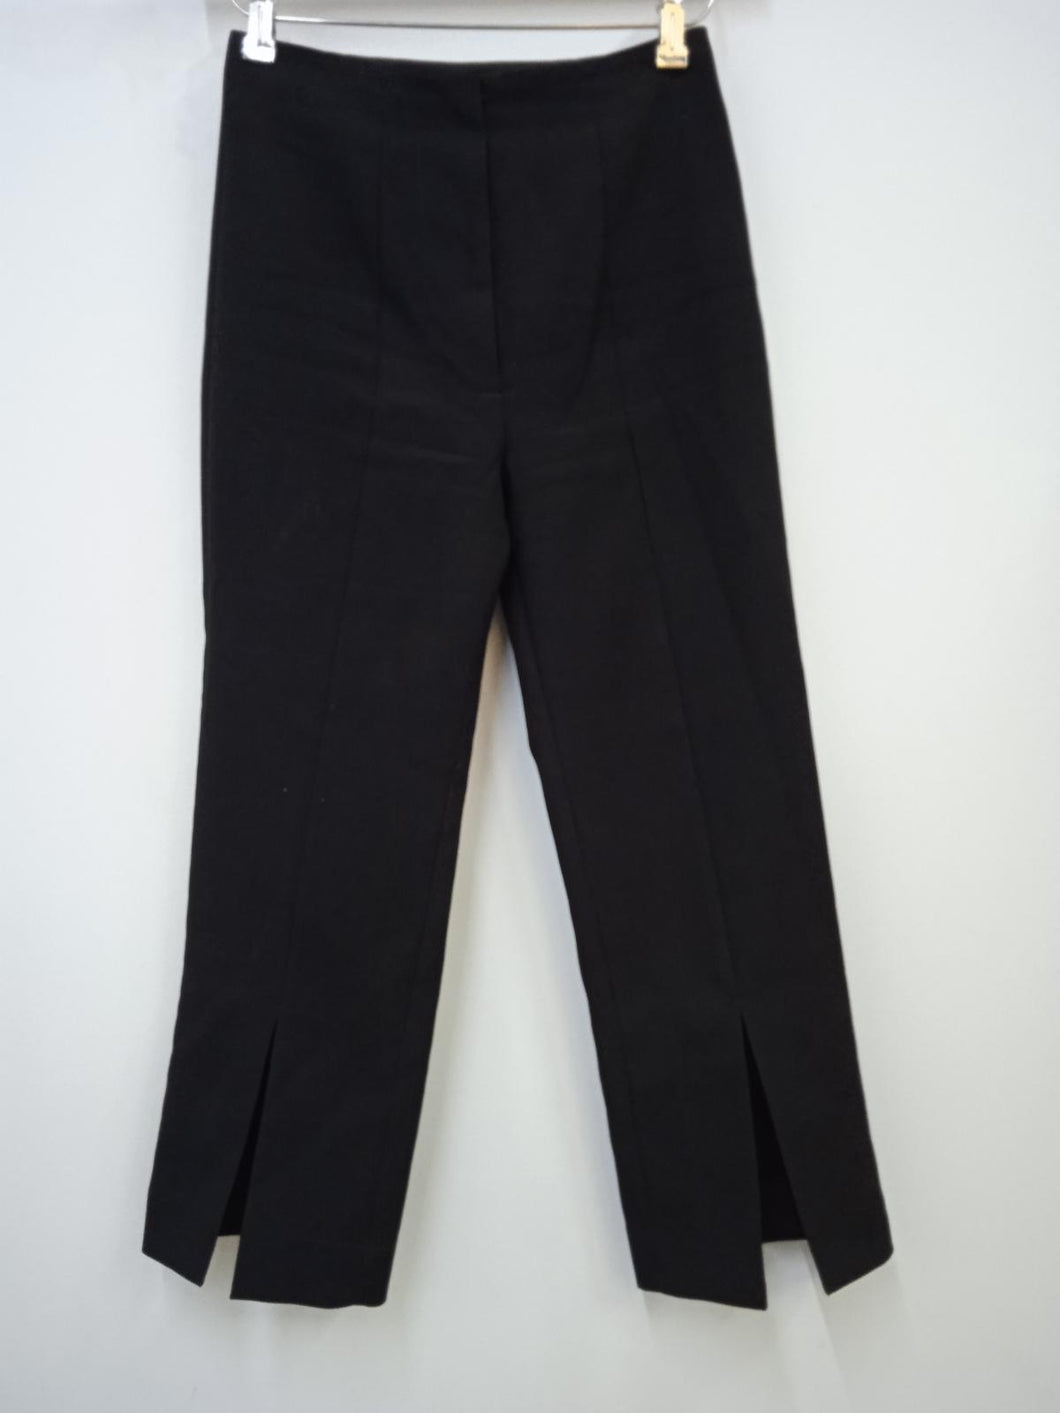 SOLACE LONDON Ladies Black Slim Fit Ankle Slit Tailored Trousers UK8 W26 L24